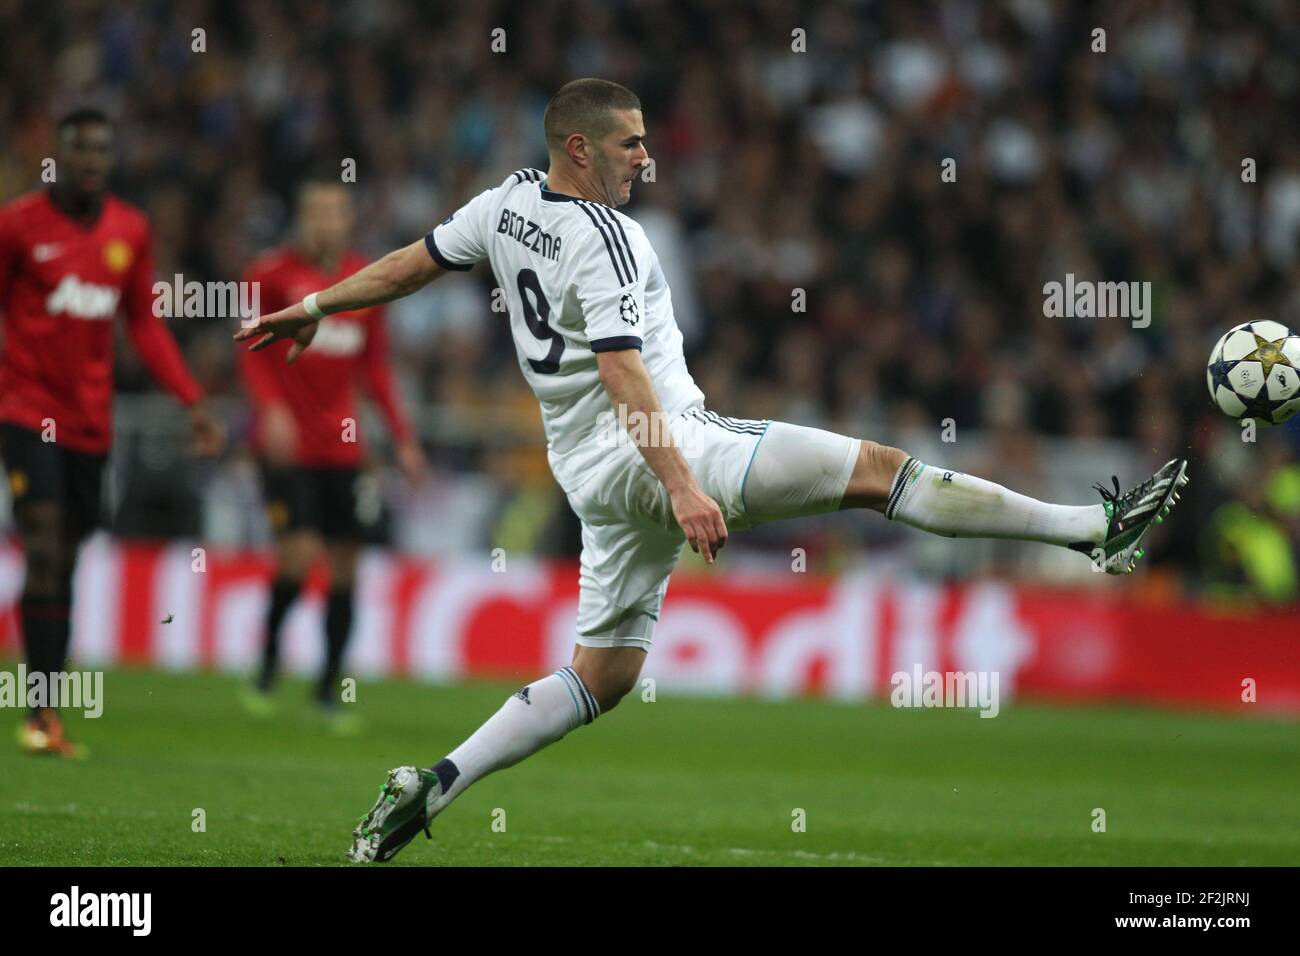 FUSSBALL - UEFA CHAMPIONS LEAGUE 2012/2013 - FINALE 1/8 - 1ST LEG - REAL MADRID / MANCHESTER UNITED - 13/02/2013 - FOTO MANUEL BLONDAU / AOP PRESS / DPPI - KARIM BENZEMA Stockfoto